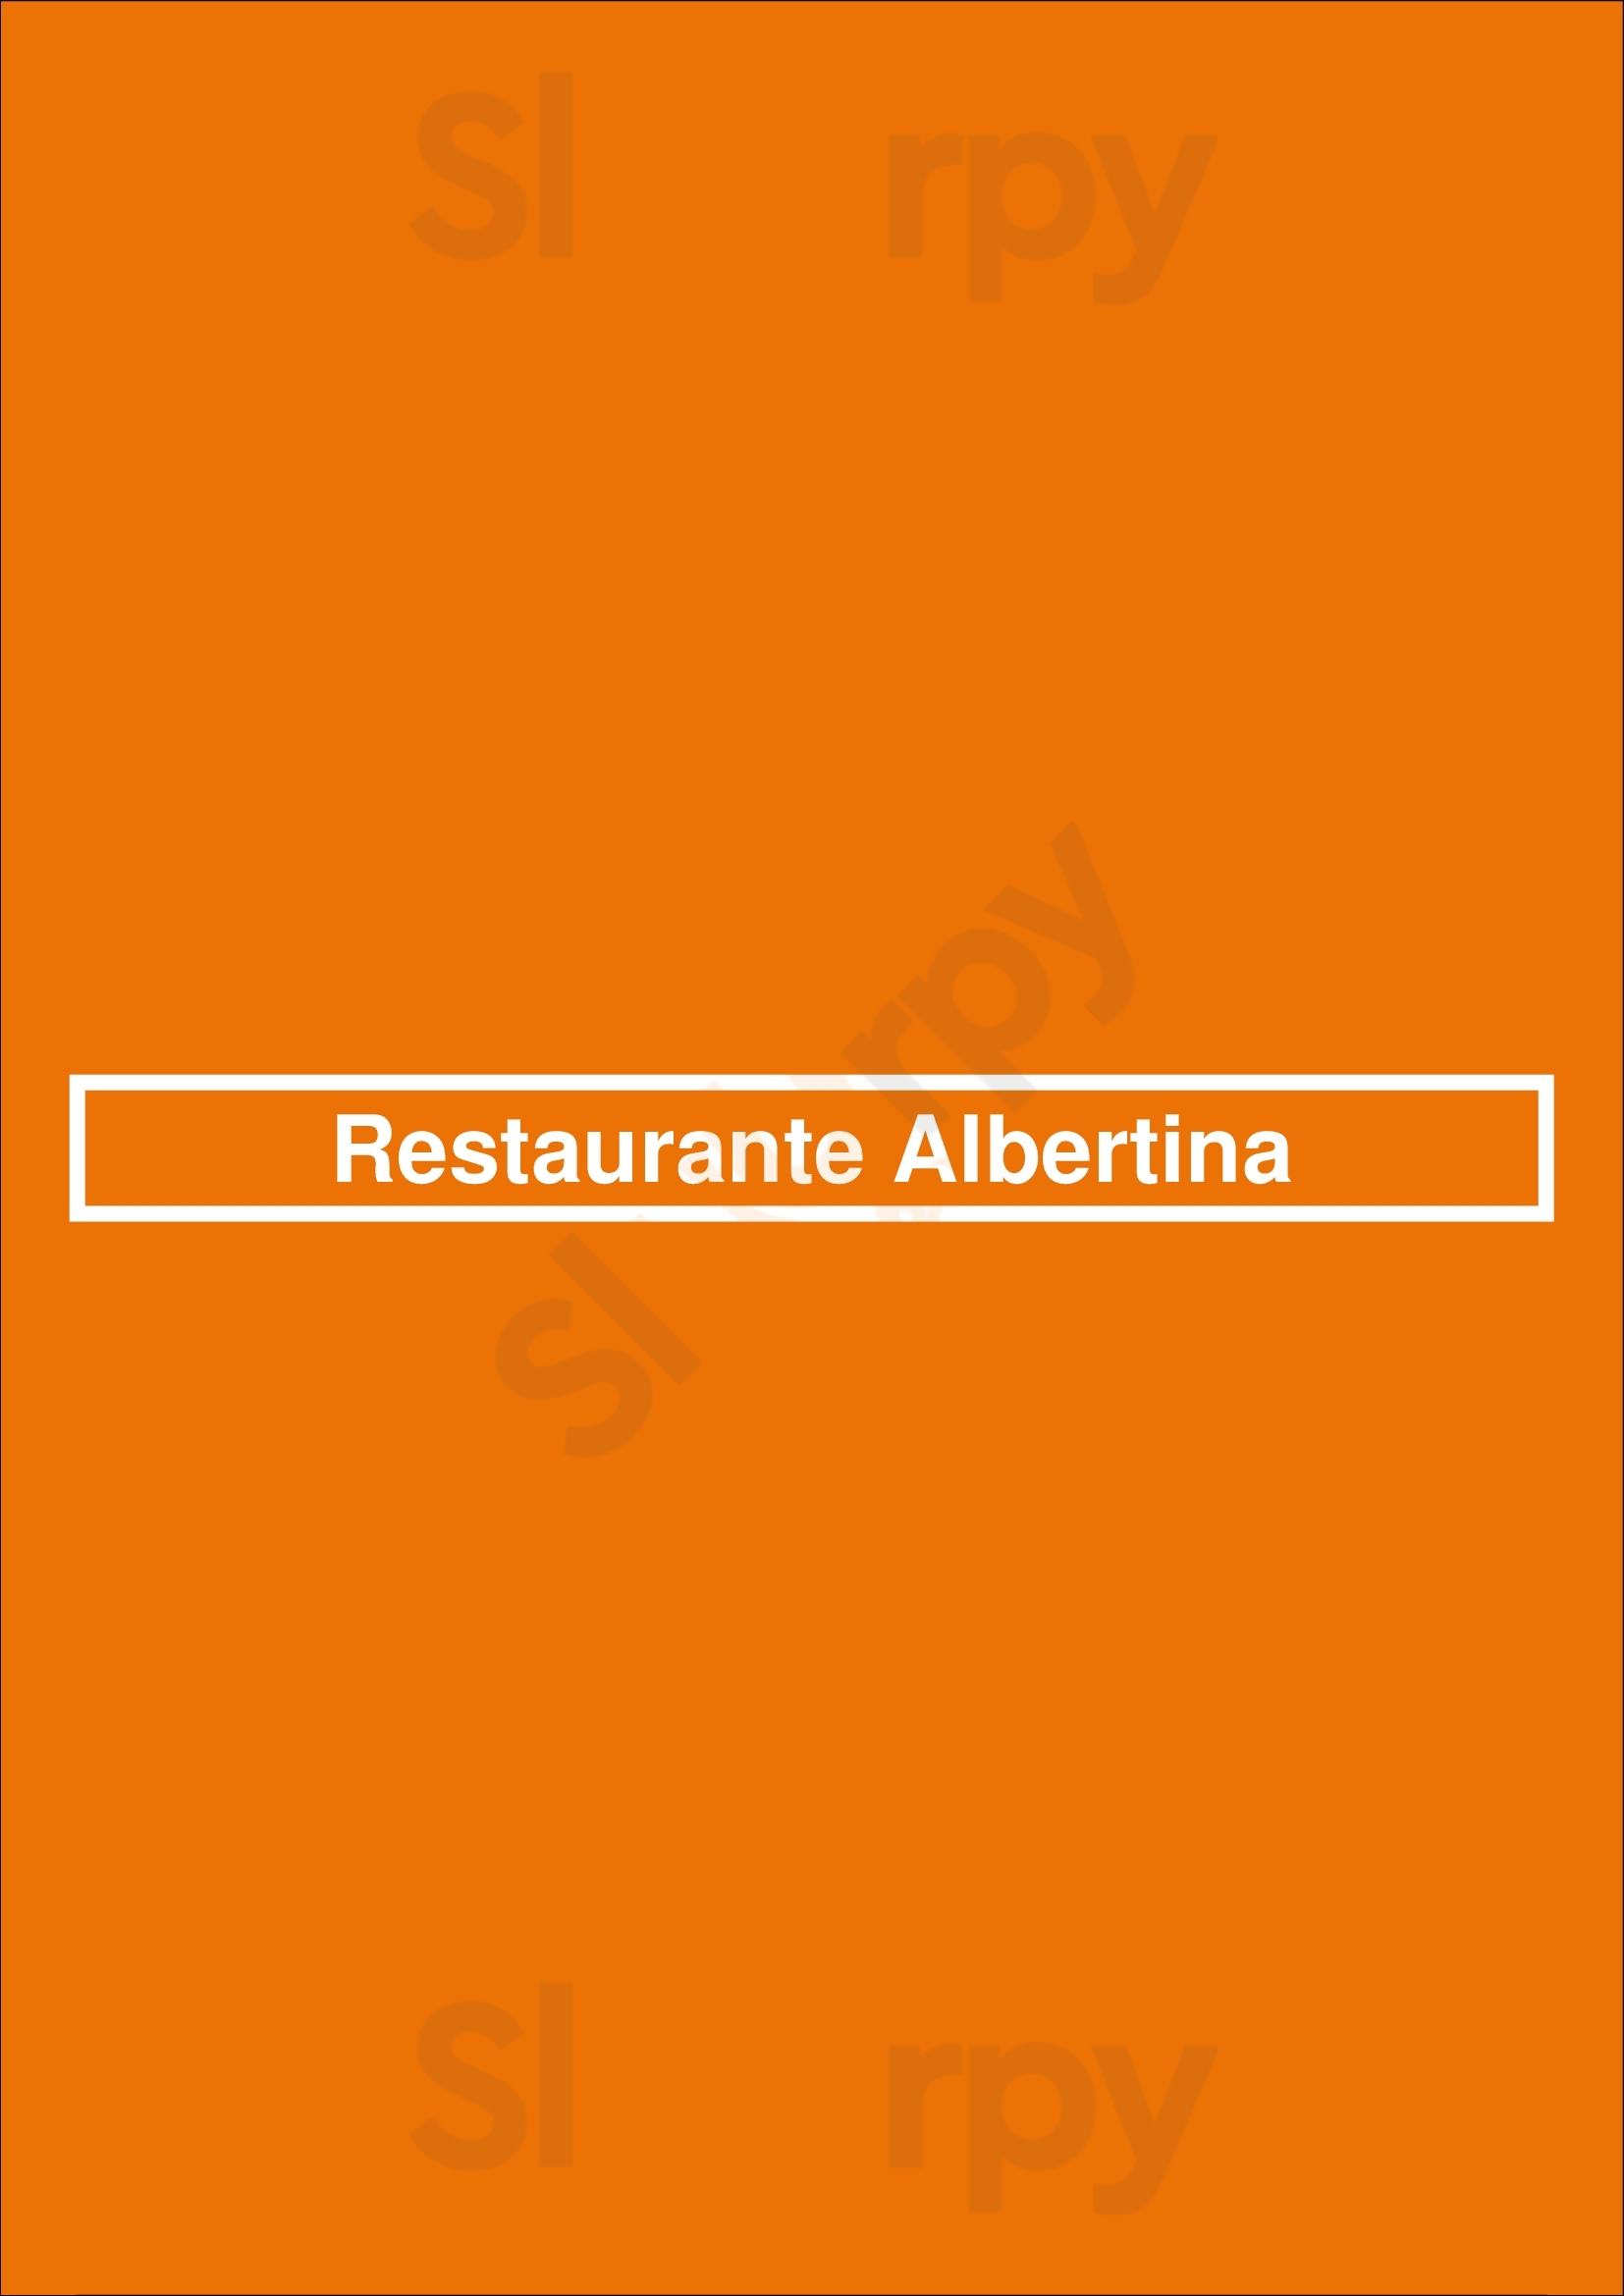 Restaurante Albertina São Paulo Menu - 1